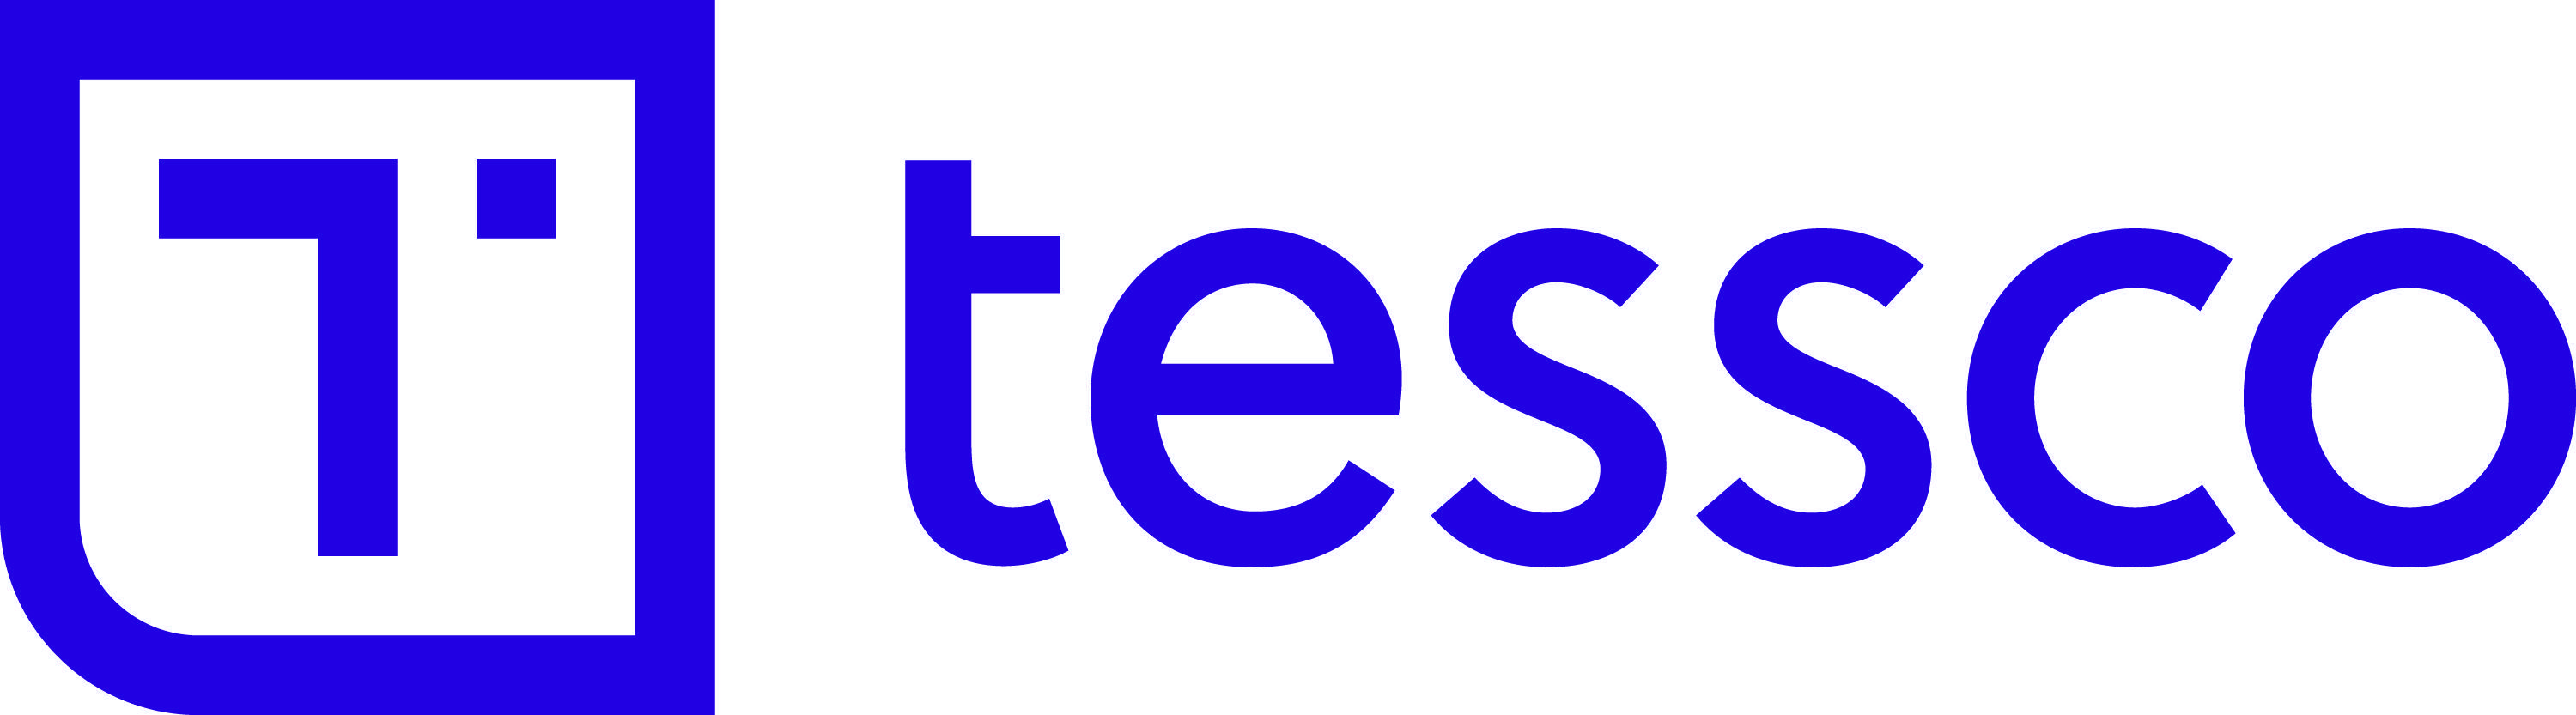 TESSCO Logo - Web.signamax.com Productphotos Signamax Logo Additional Logos Tessco